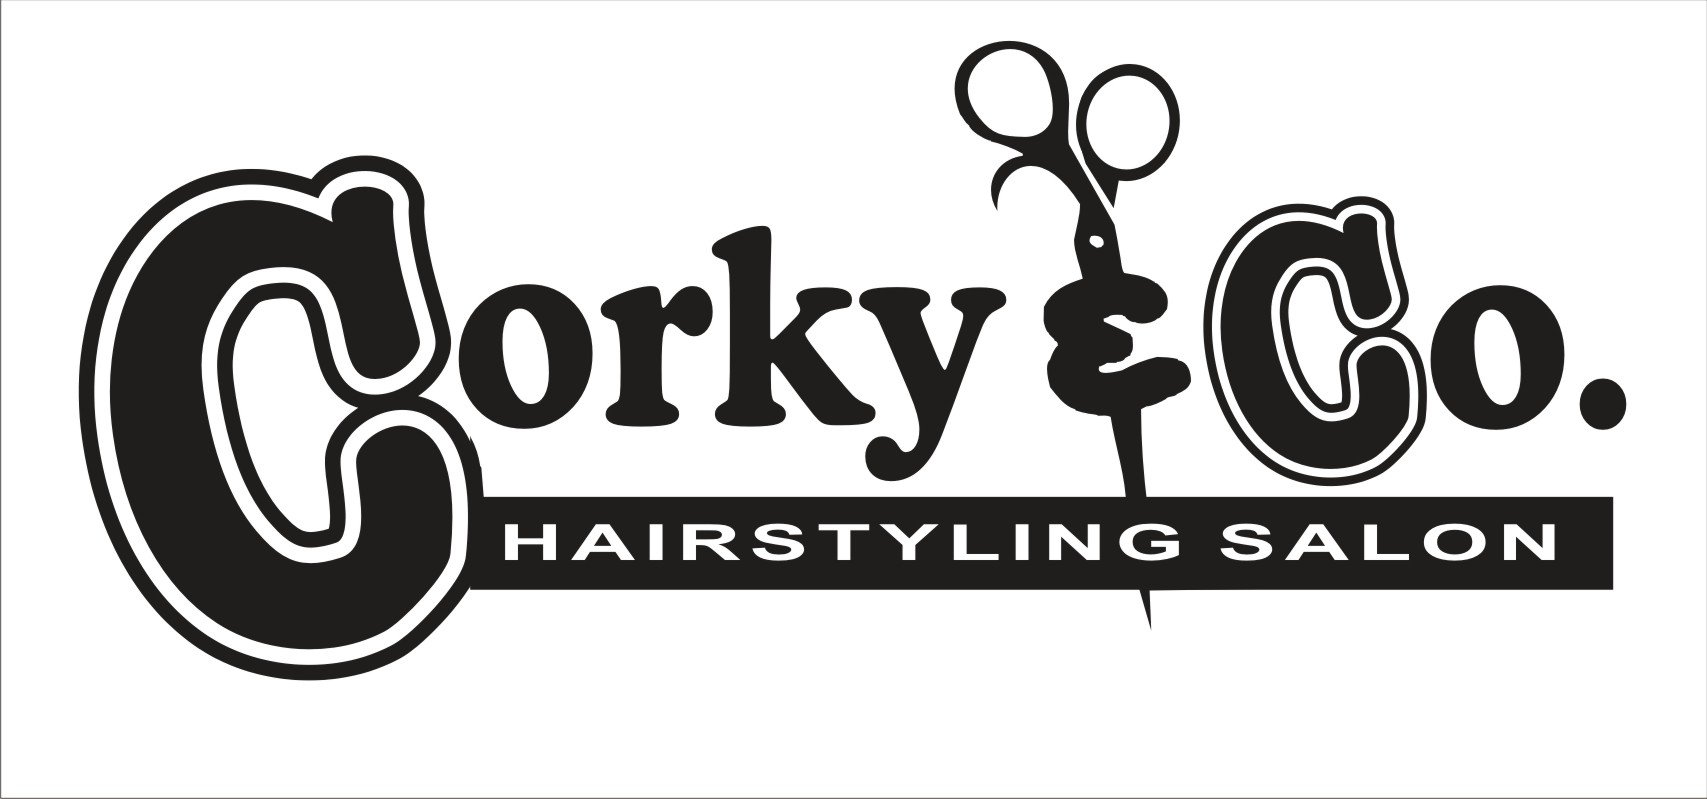 Corky & Co logo.JPG